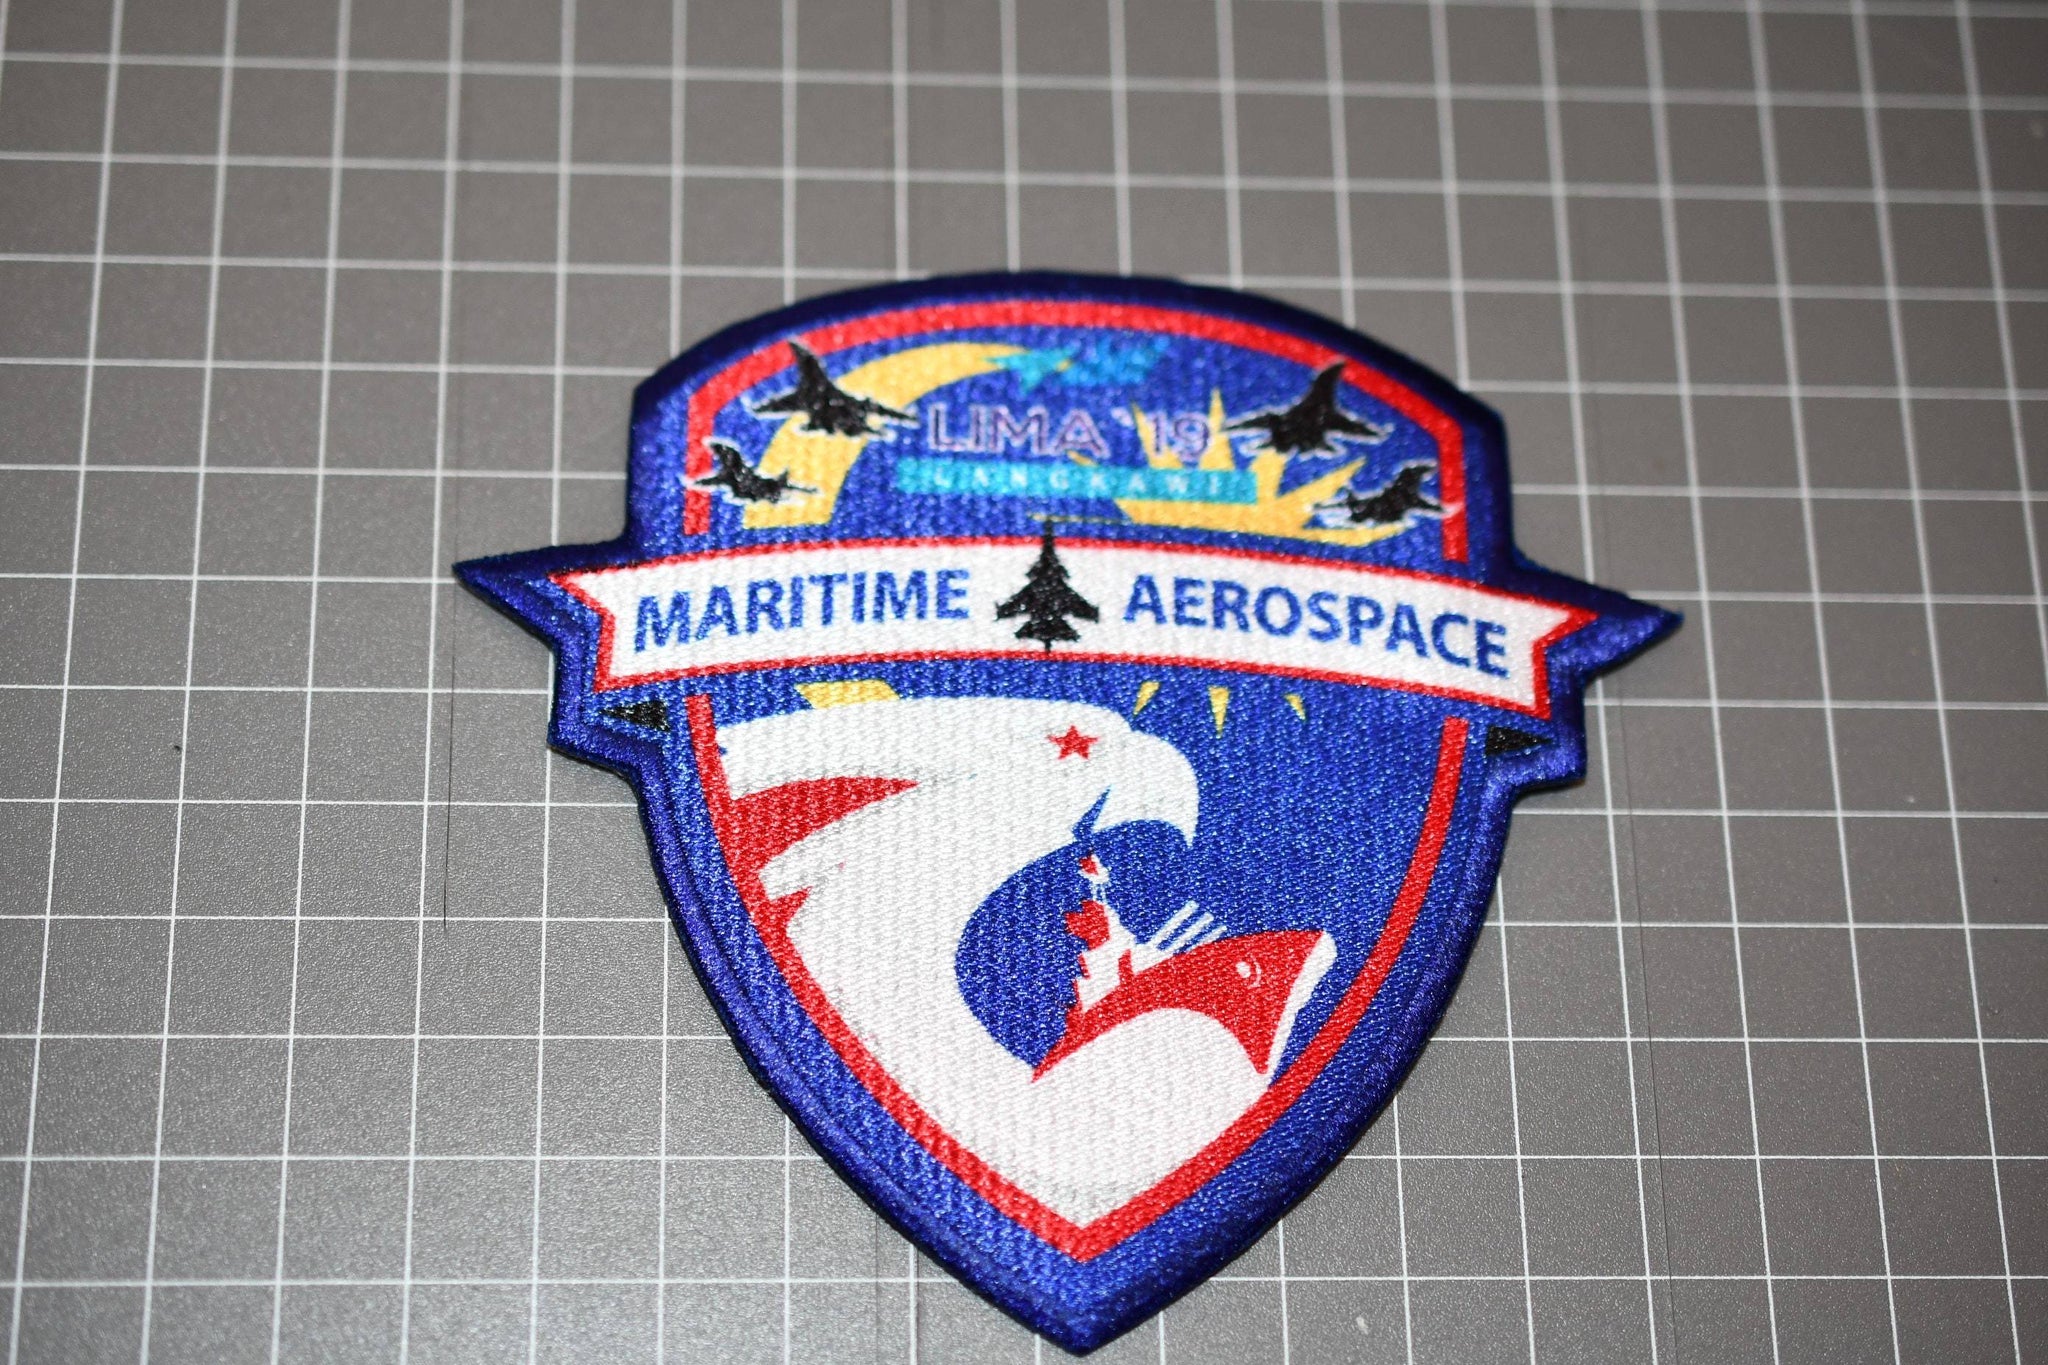 Malaysia Military Exercise Lima'19 Maritime Aerospace Patch (B5)